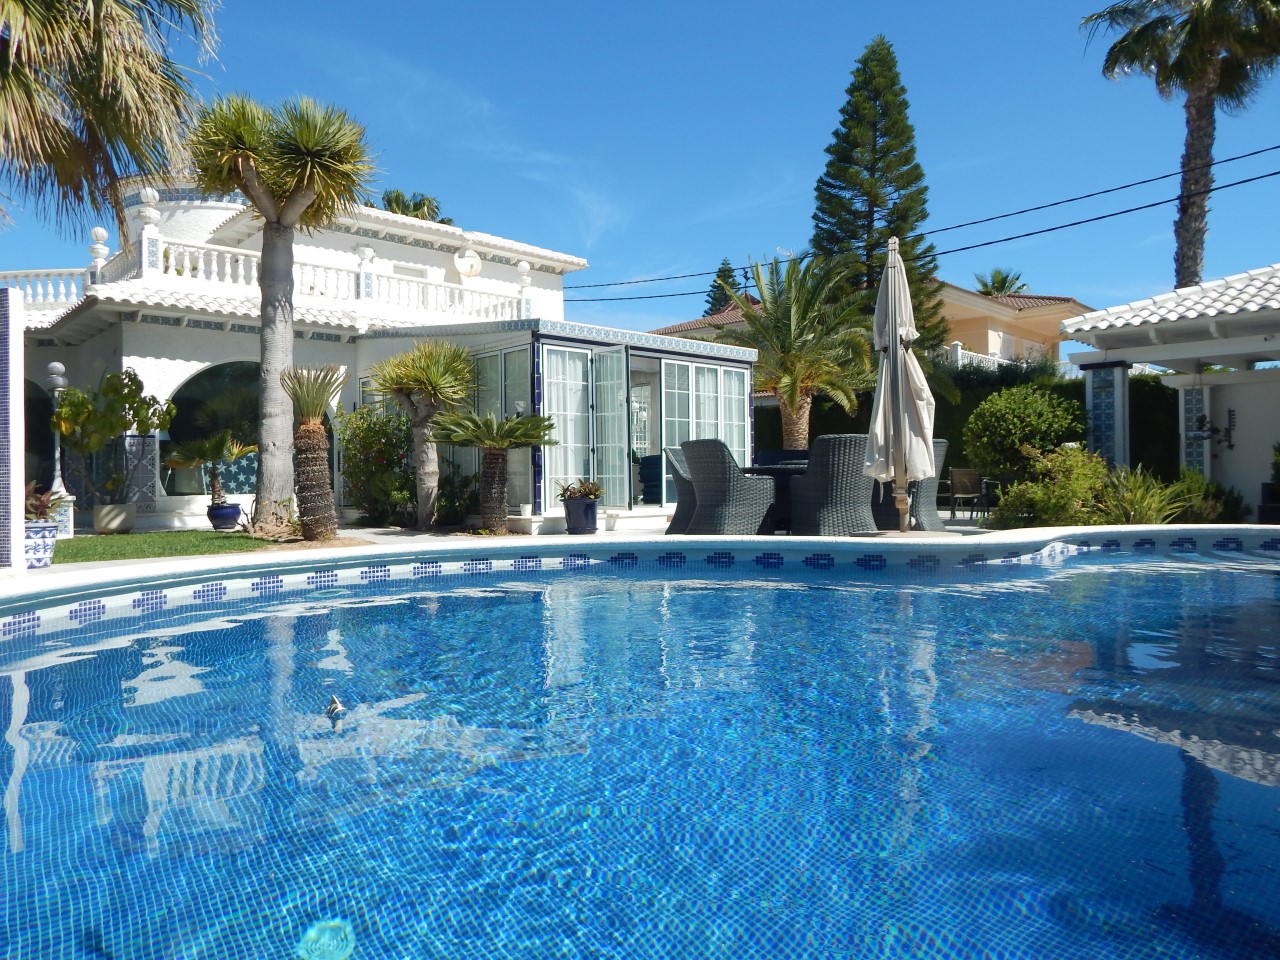 4 bedroom house / villa for sale in Cabo Roig, Costa Blanca